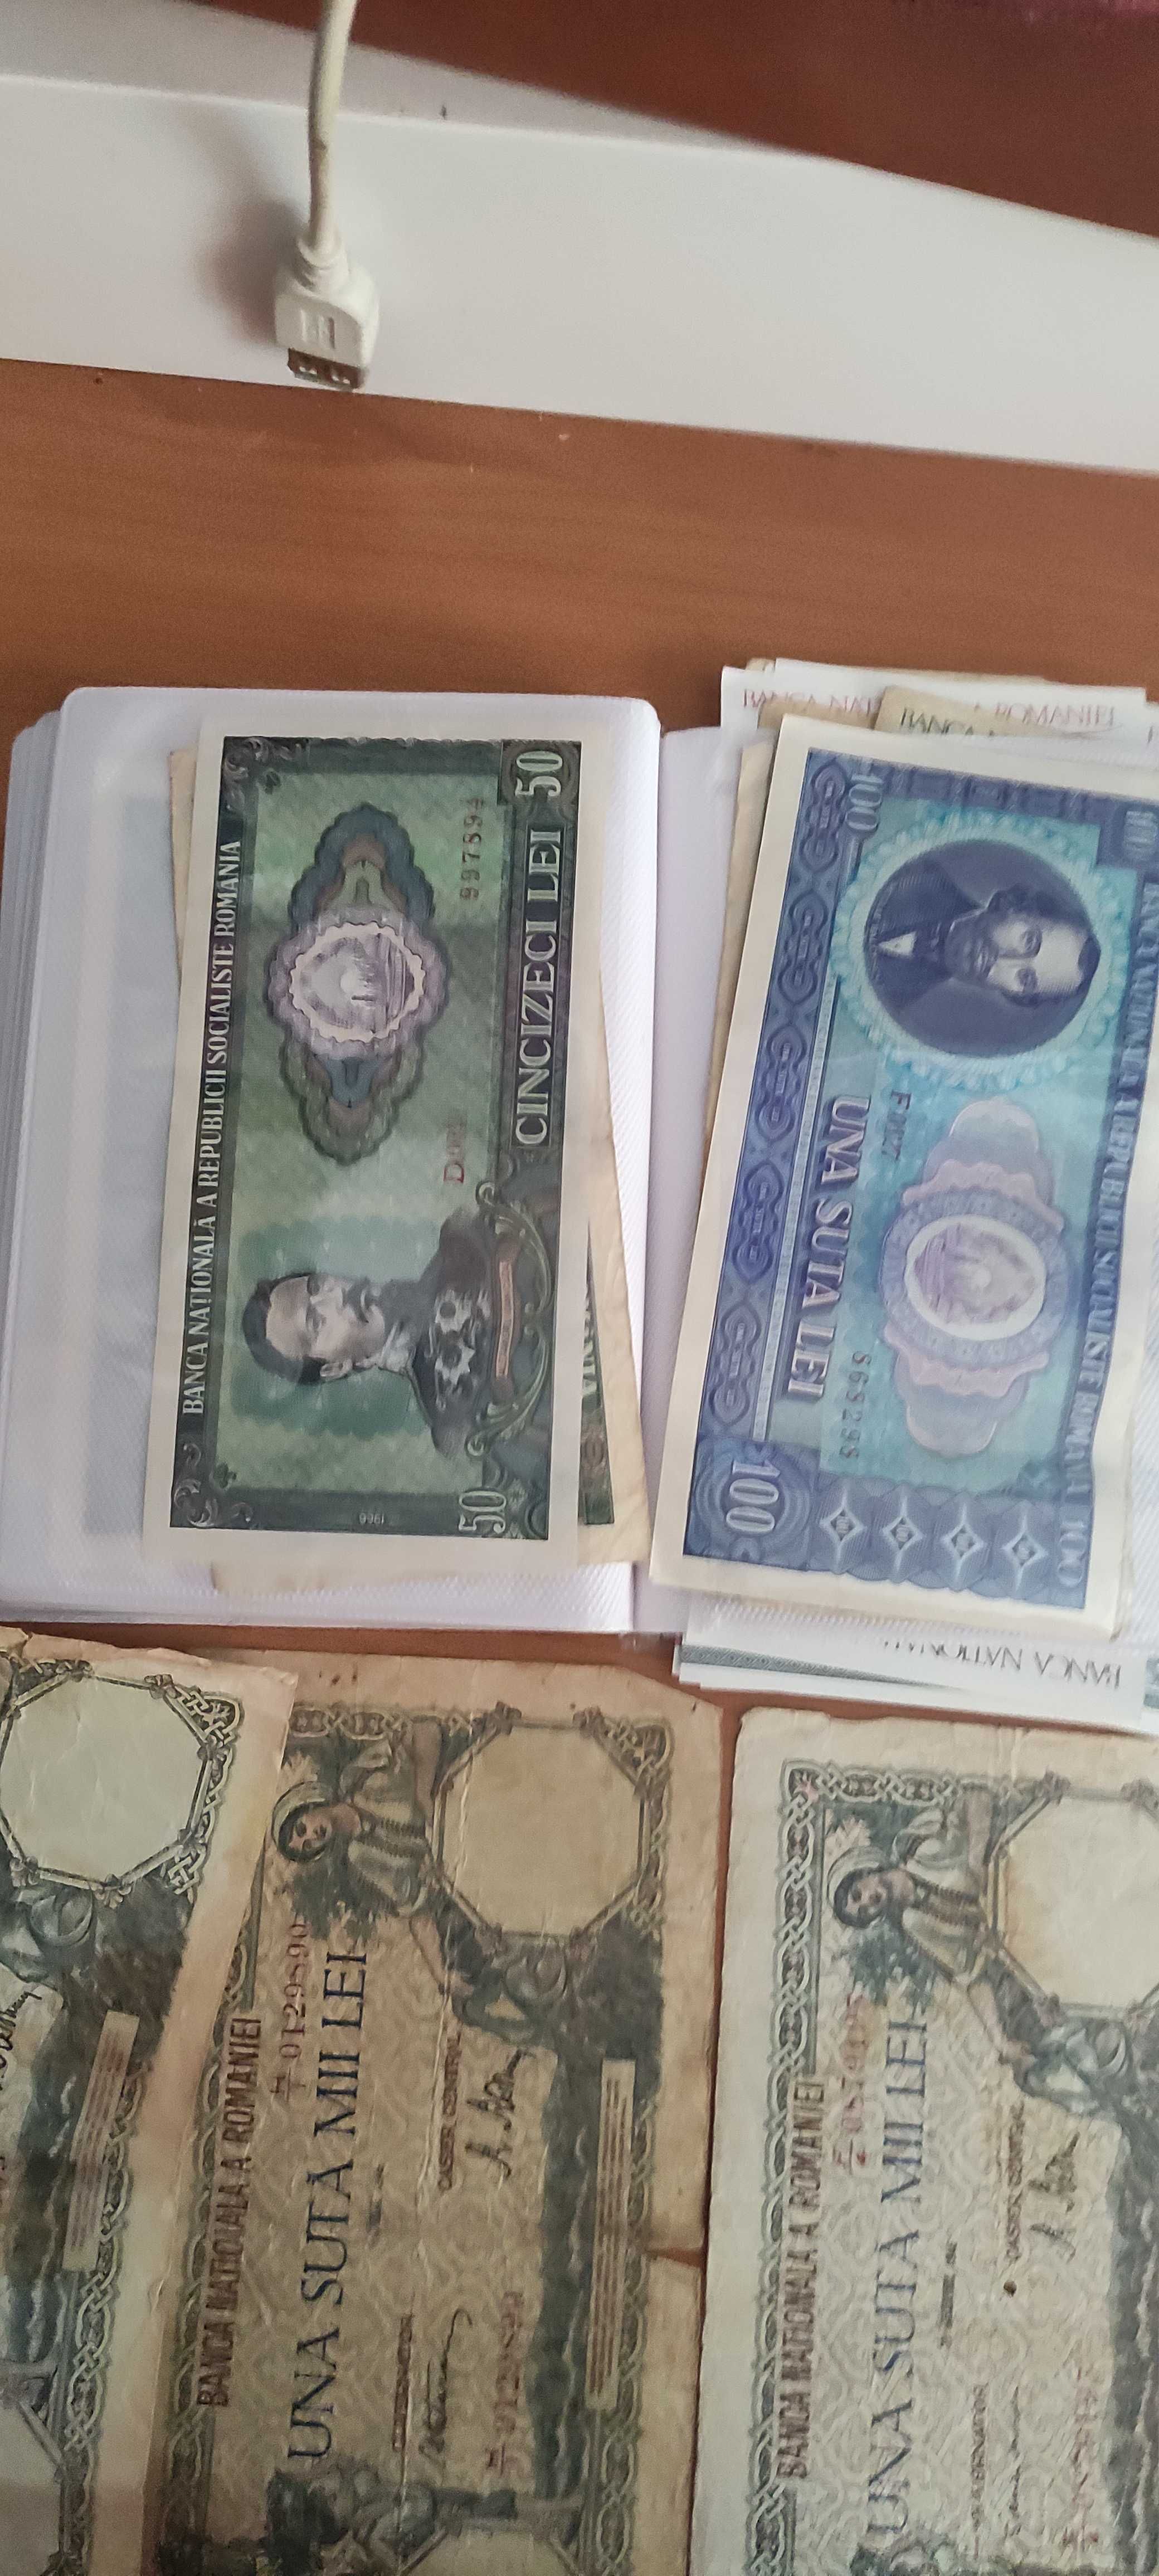 Bancnote vechi românești și străine